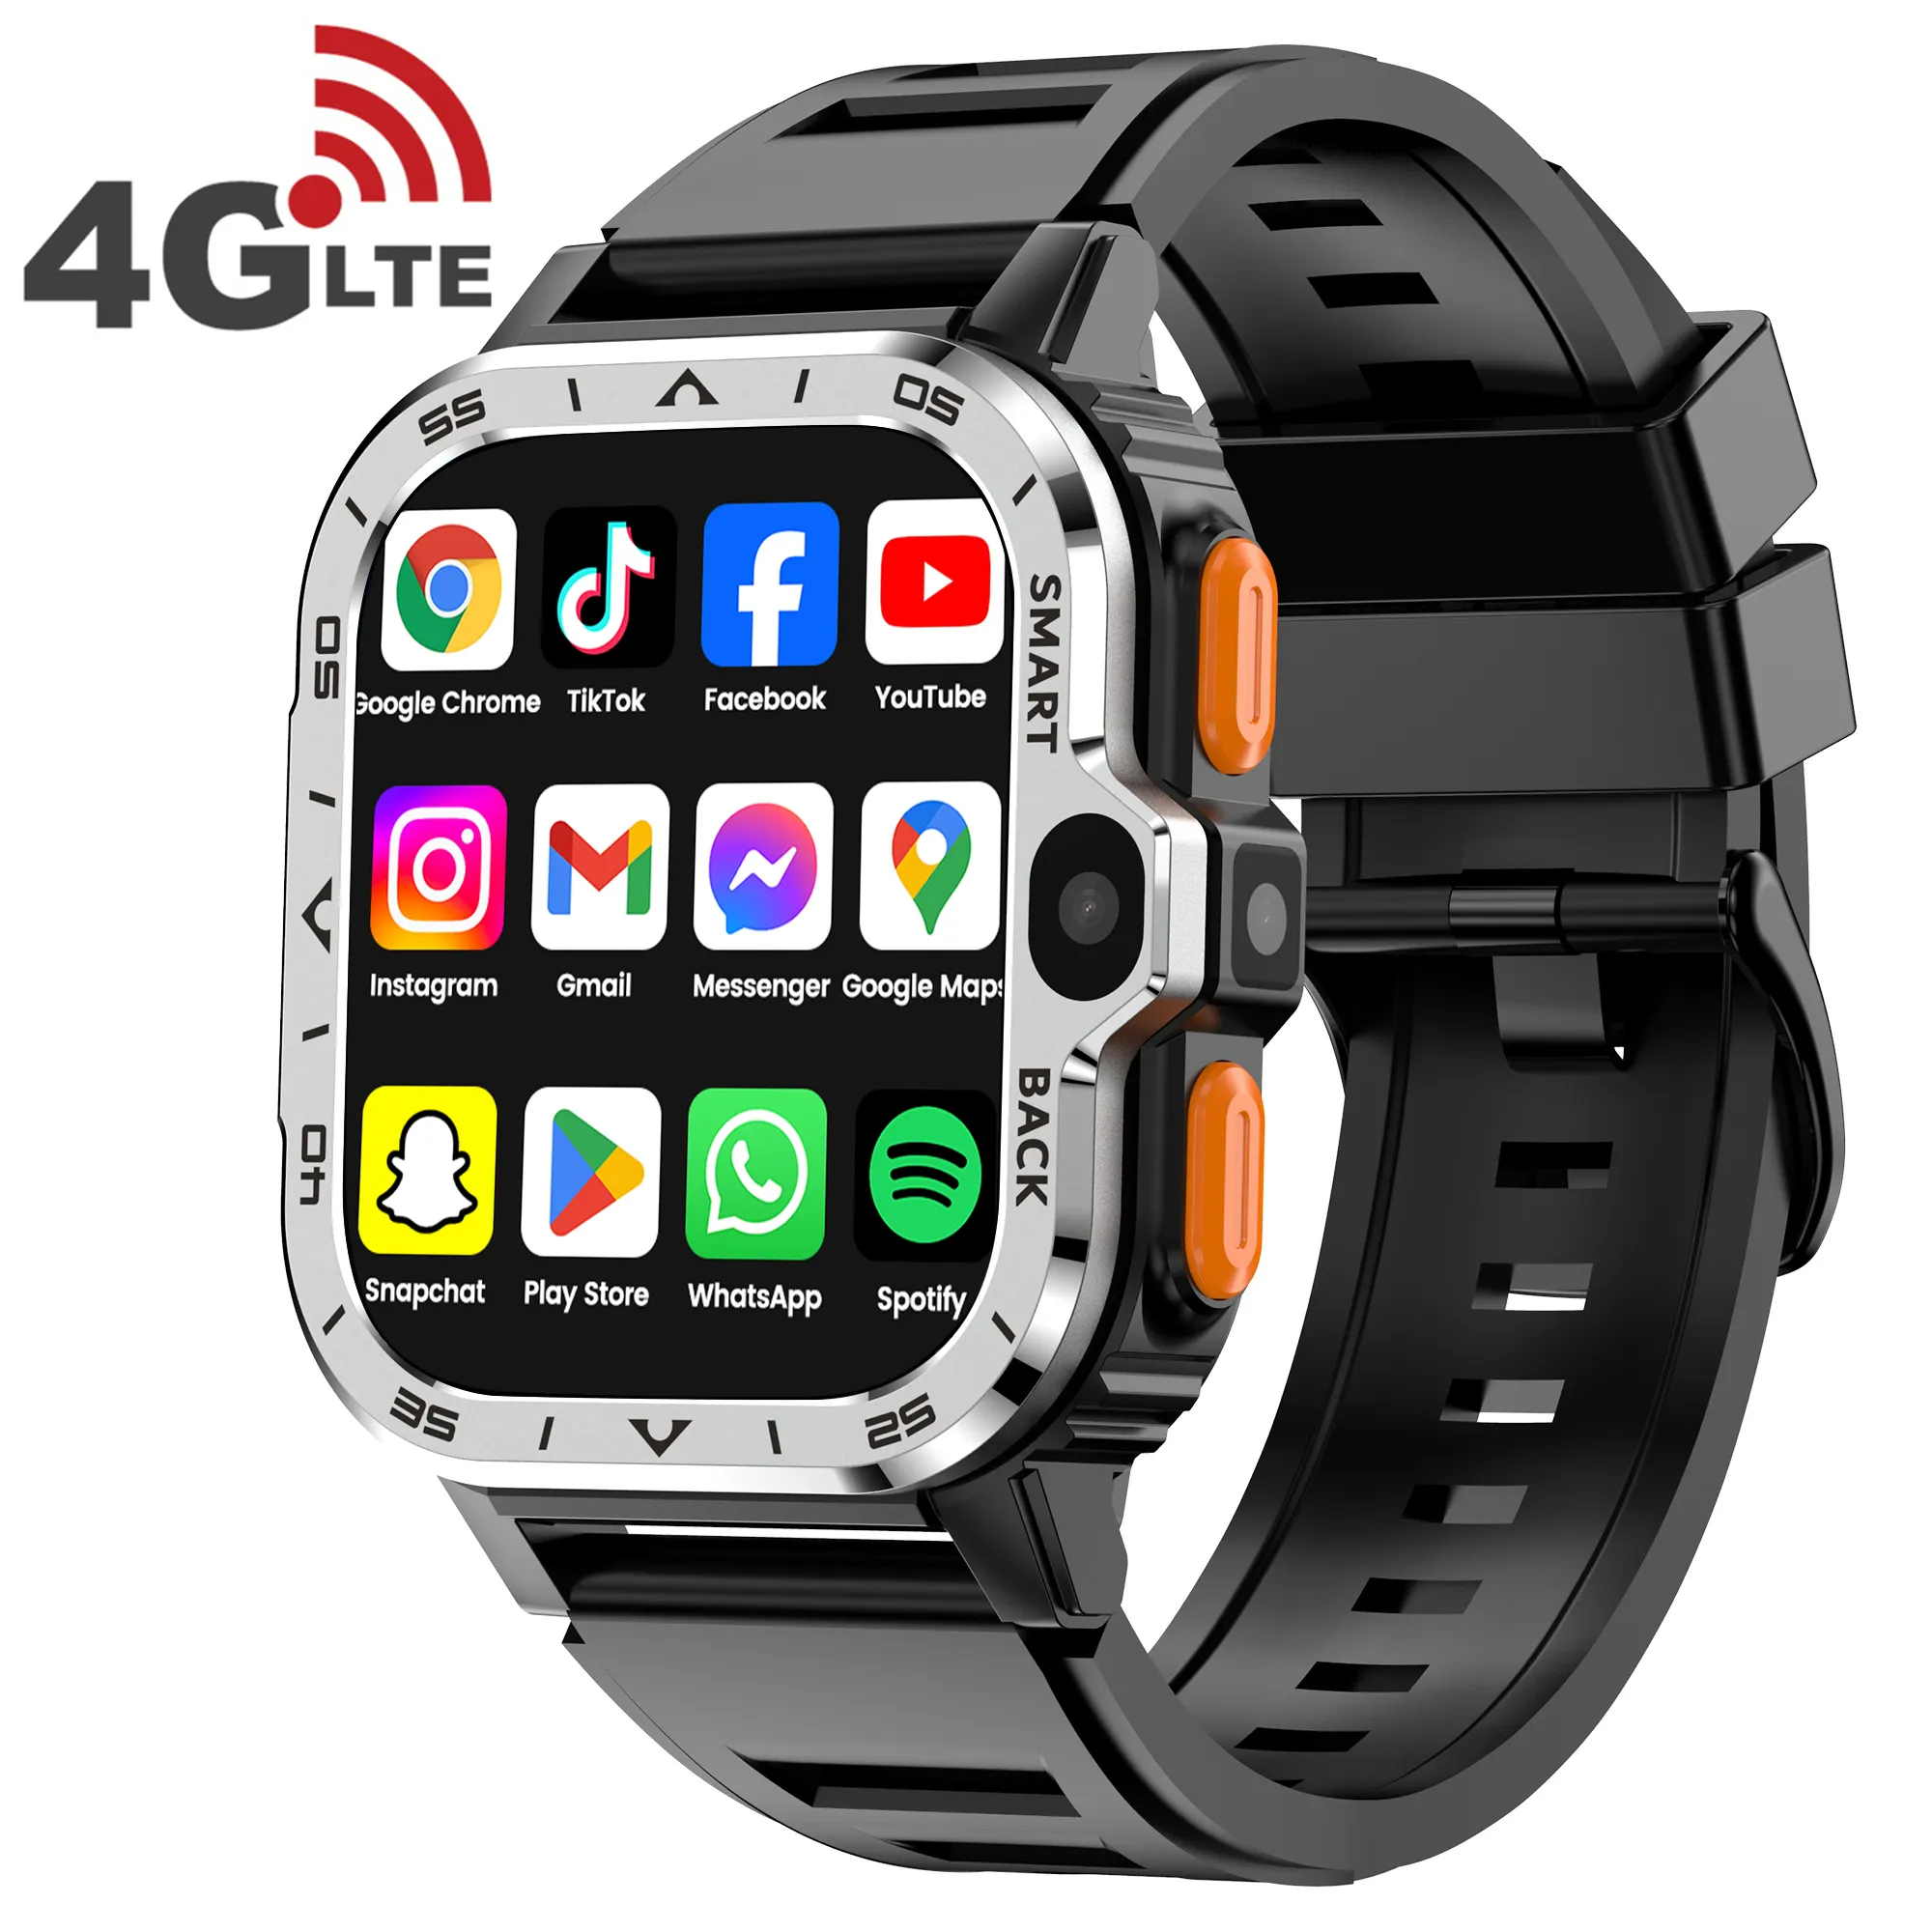 VALDUS 4G Android Phone Smartwatch RAM 4GB ROM 64GB Camera PGD Smart Watch montre relogio reloj inteligente